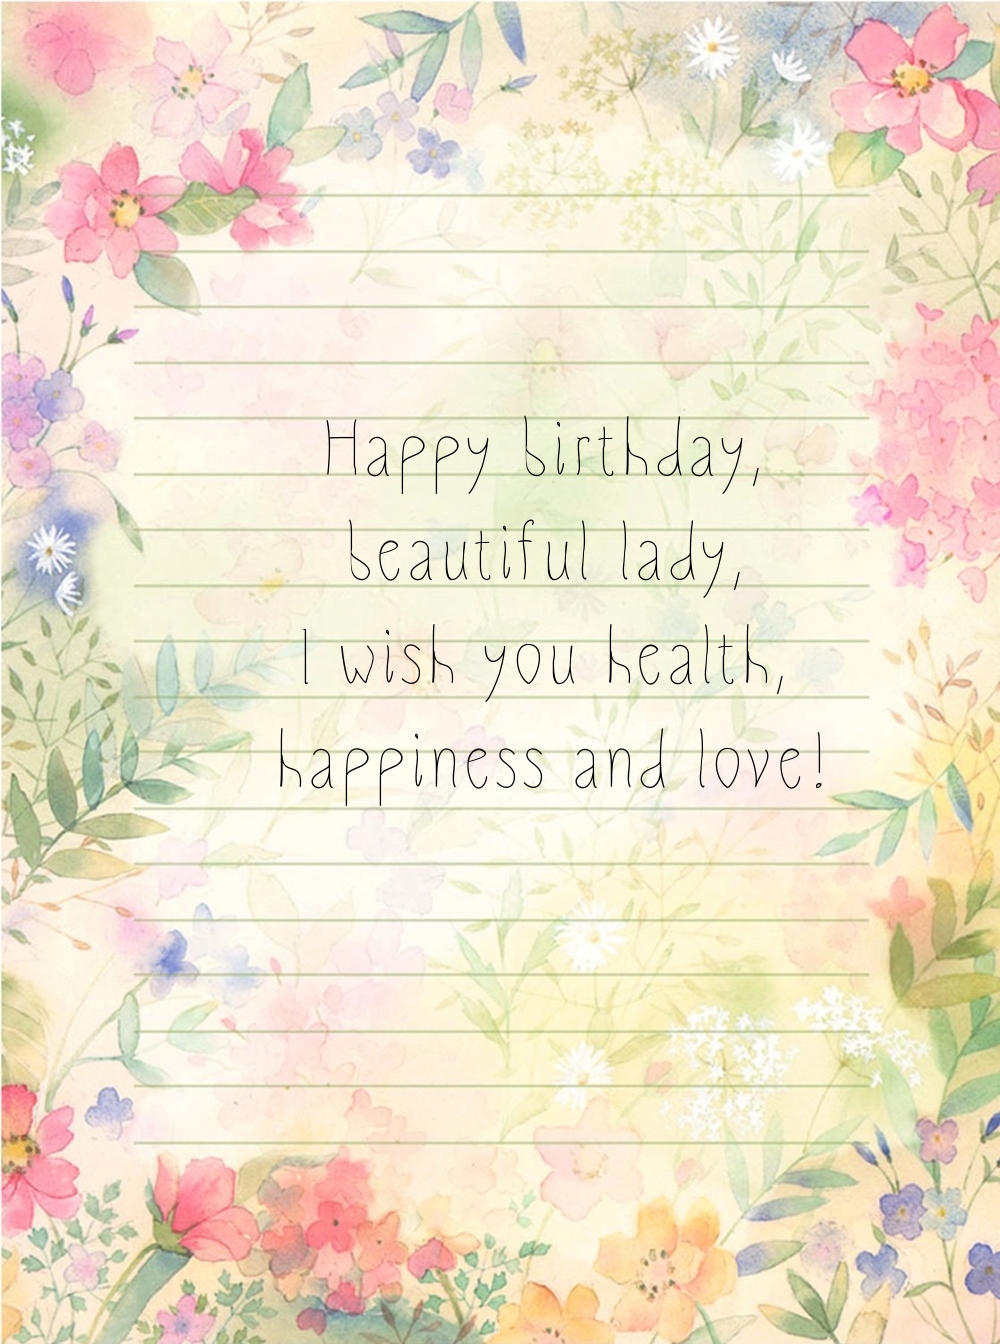 Happy birthday, beautiful lady, I wish you health, happiness and love!